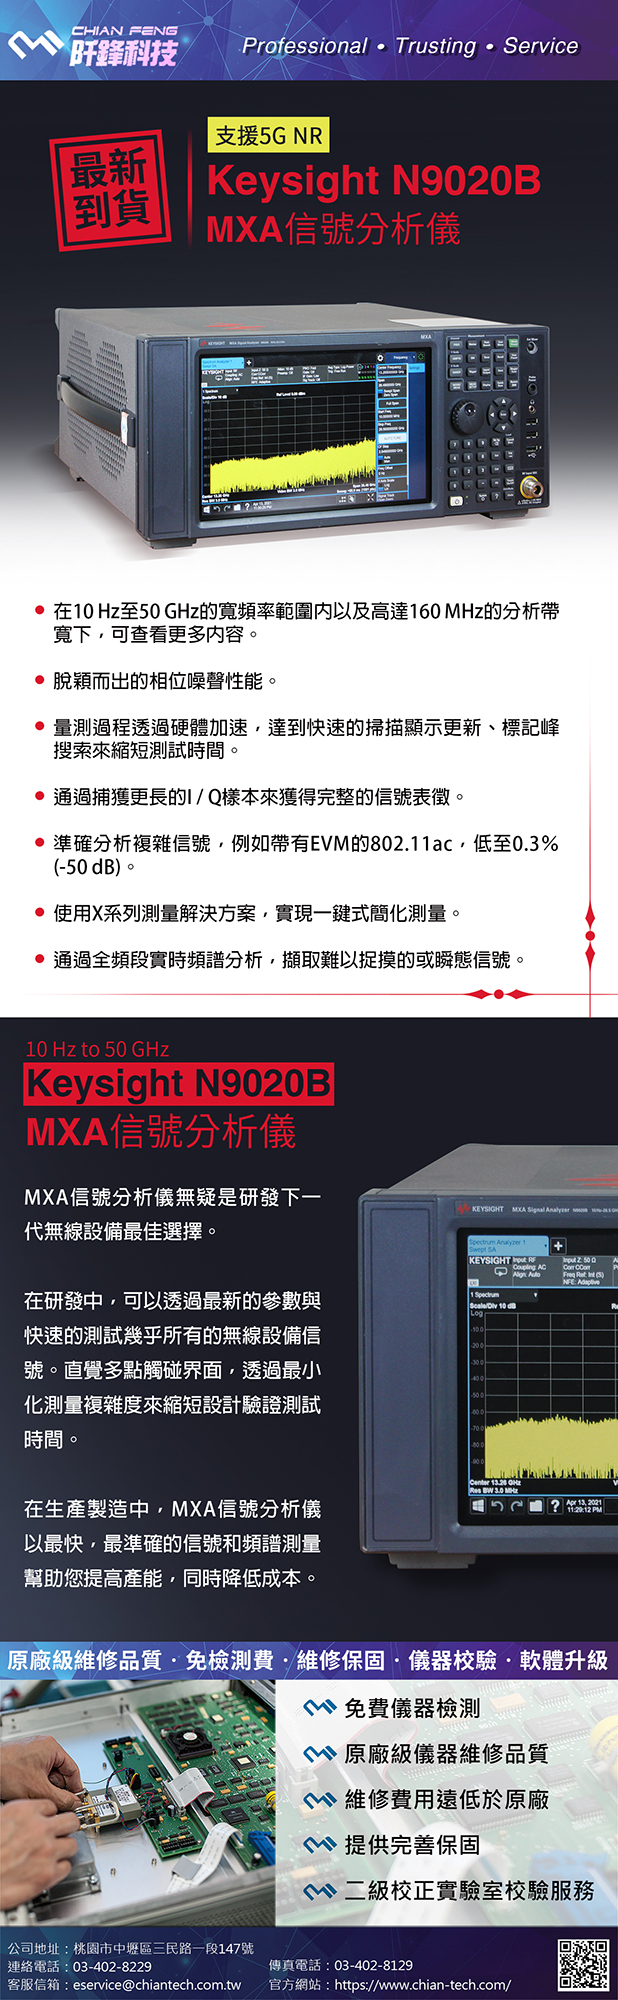 Keysight,N9020B,信號分析儀,儀器維修,儀器租賃,儀器校驗,維修,租賃,買賣,校驗,維修檢測